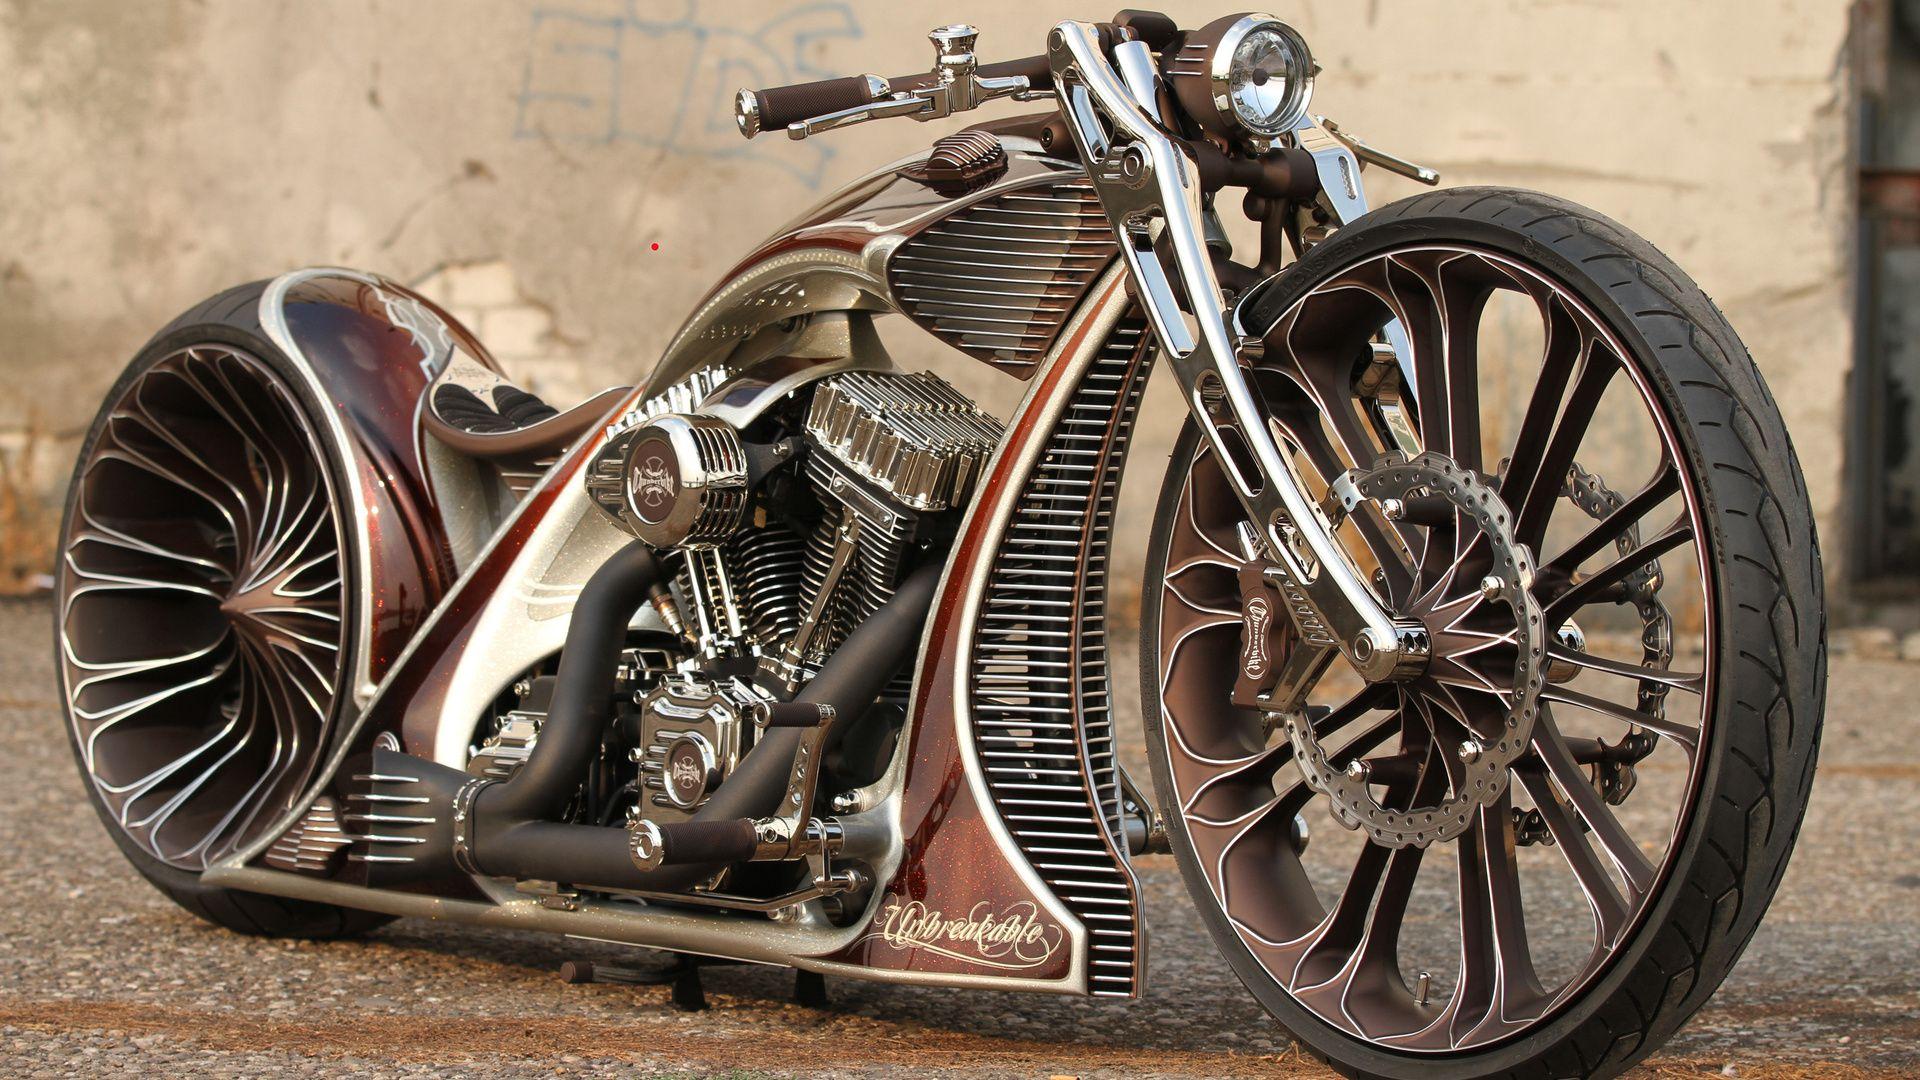 Harley Davidson, Motorcycles, Harley, Cool Harley, Bike